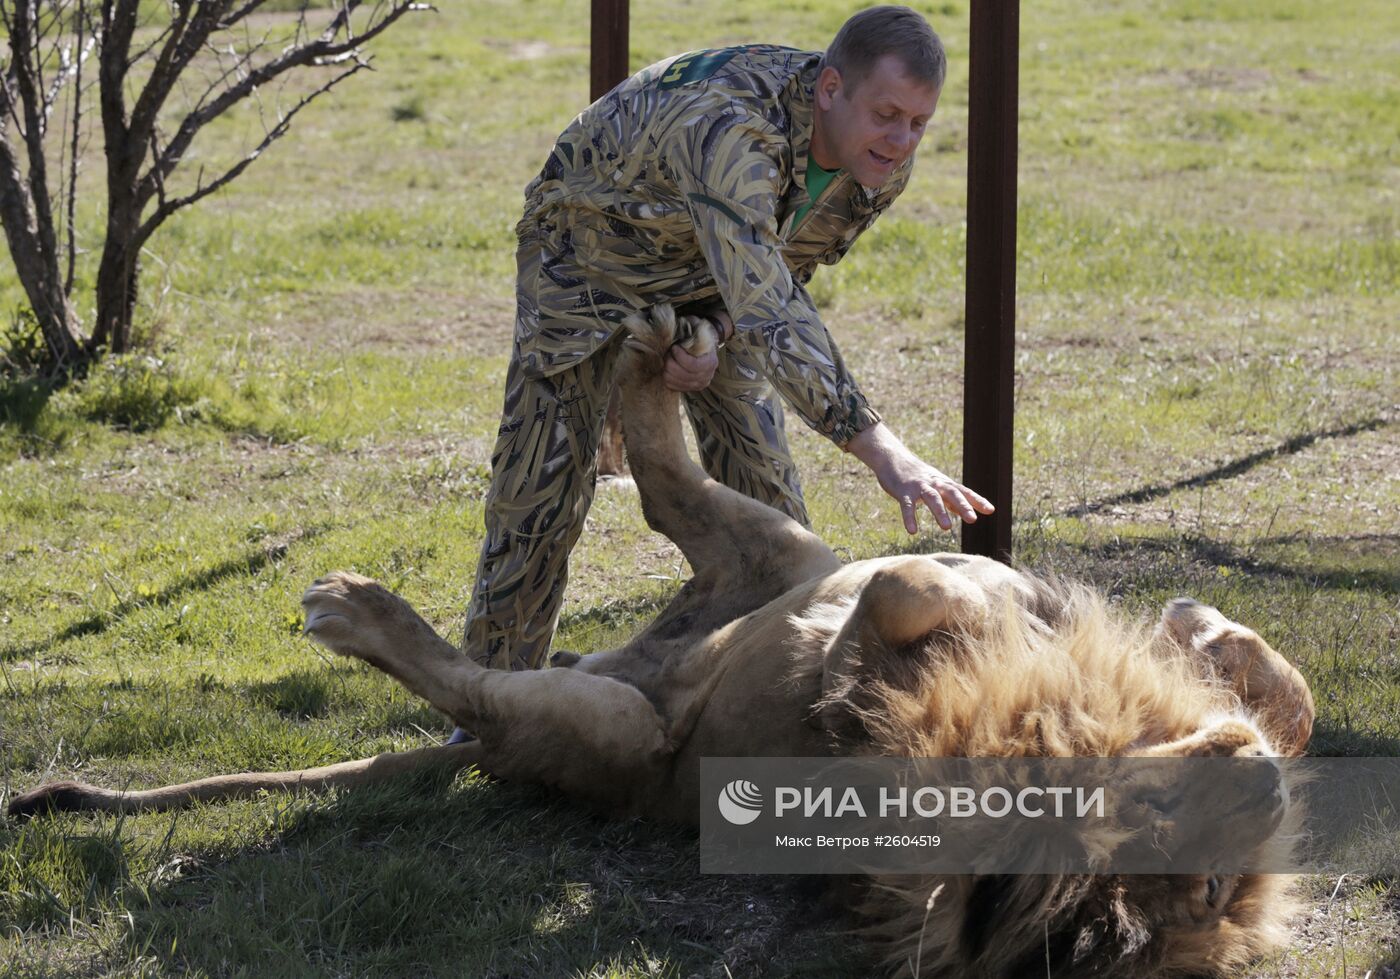 Сафари-парк львов "Тайган" в Крыму